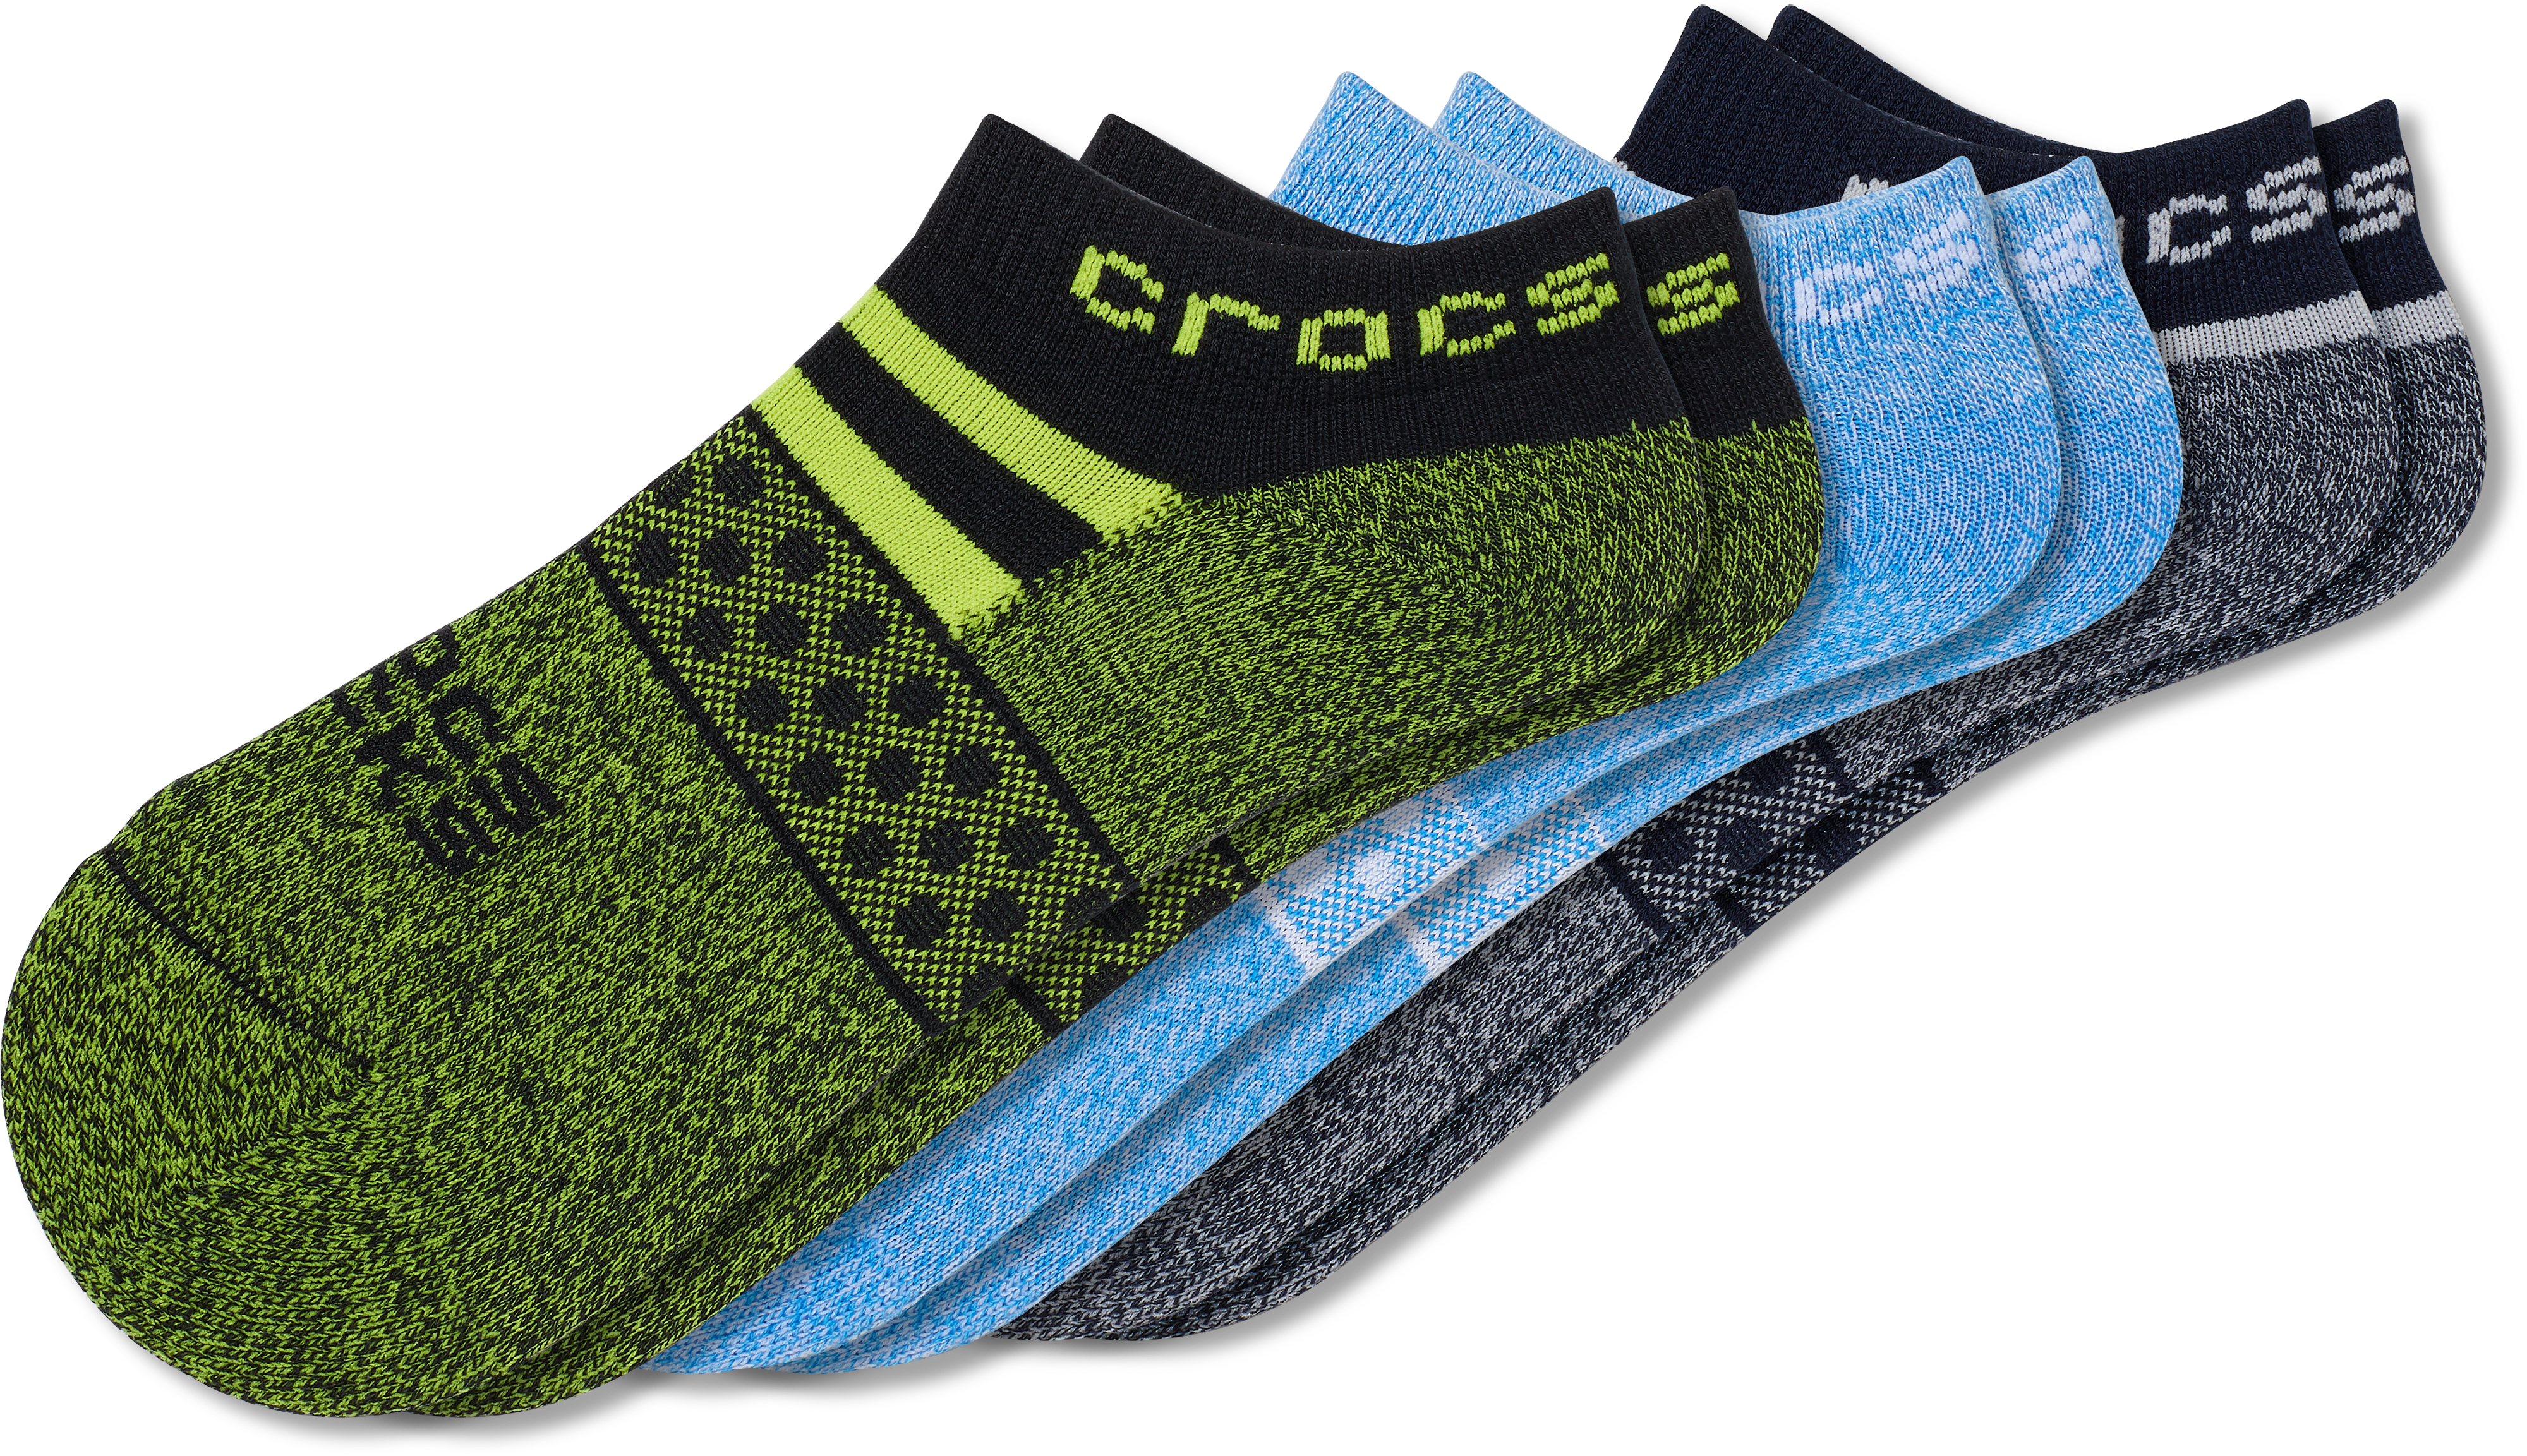 Crocs | Kids | Crocs Socks Low Pool Party 3 Pack | Shoes | Blue / Green | M